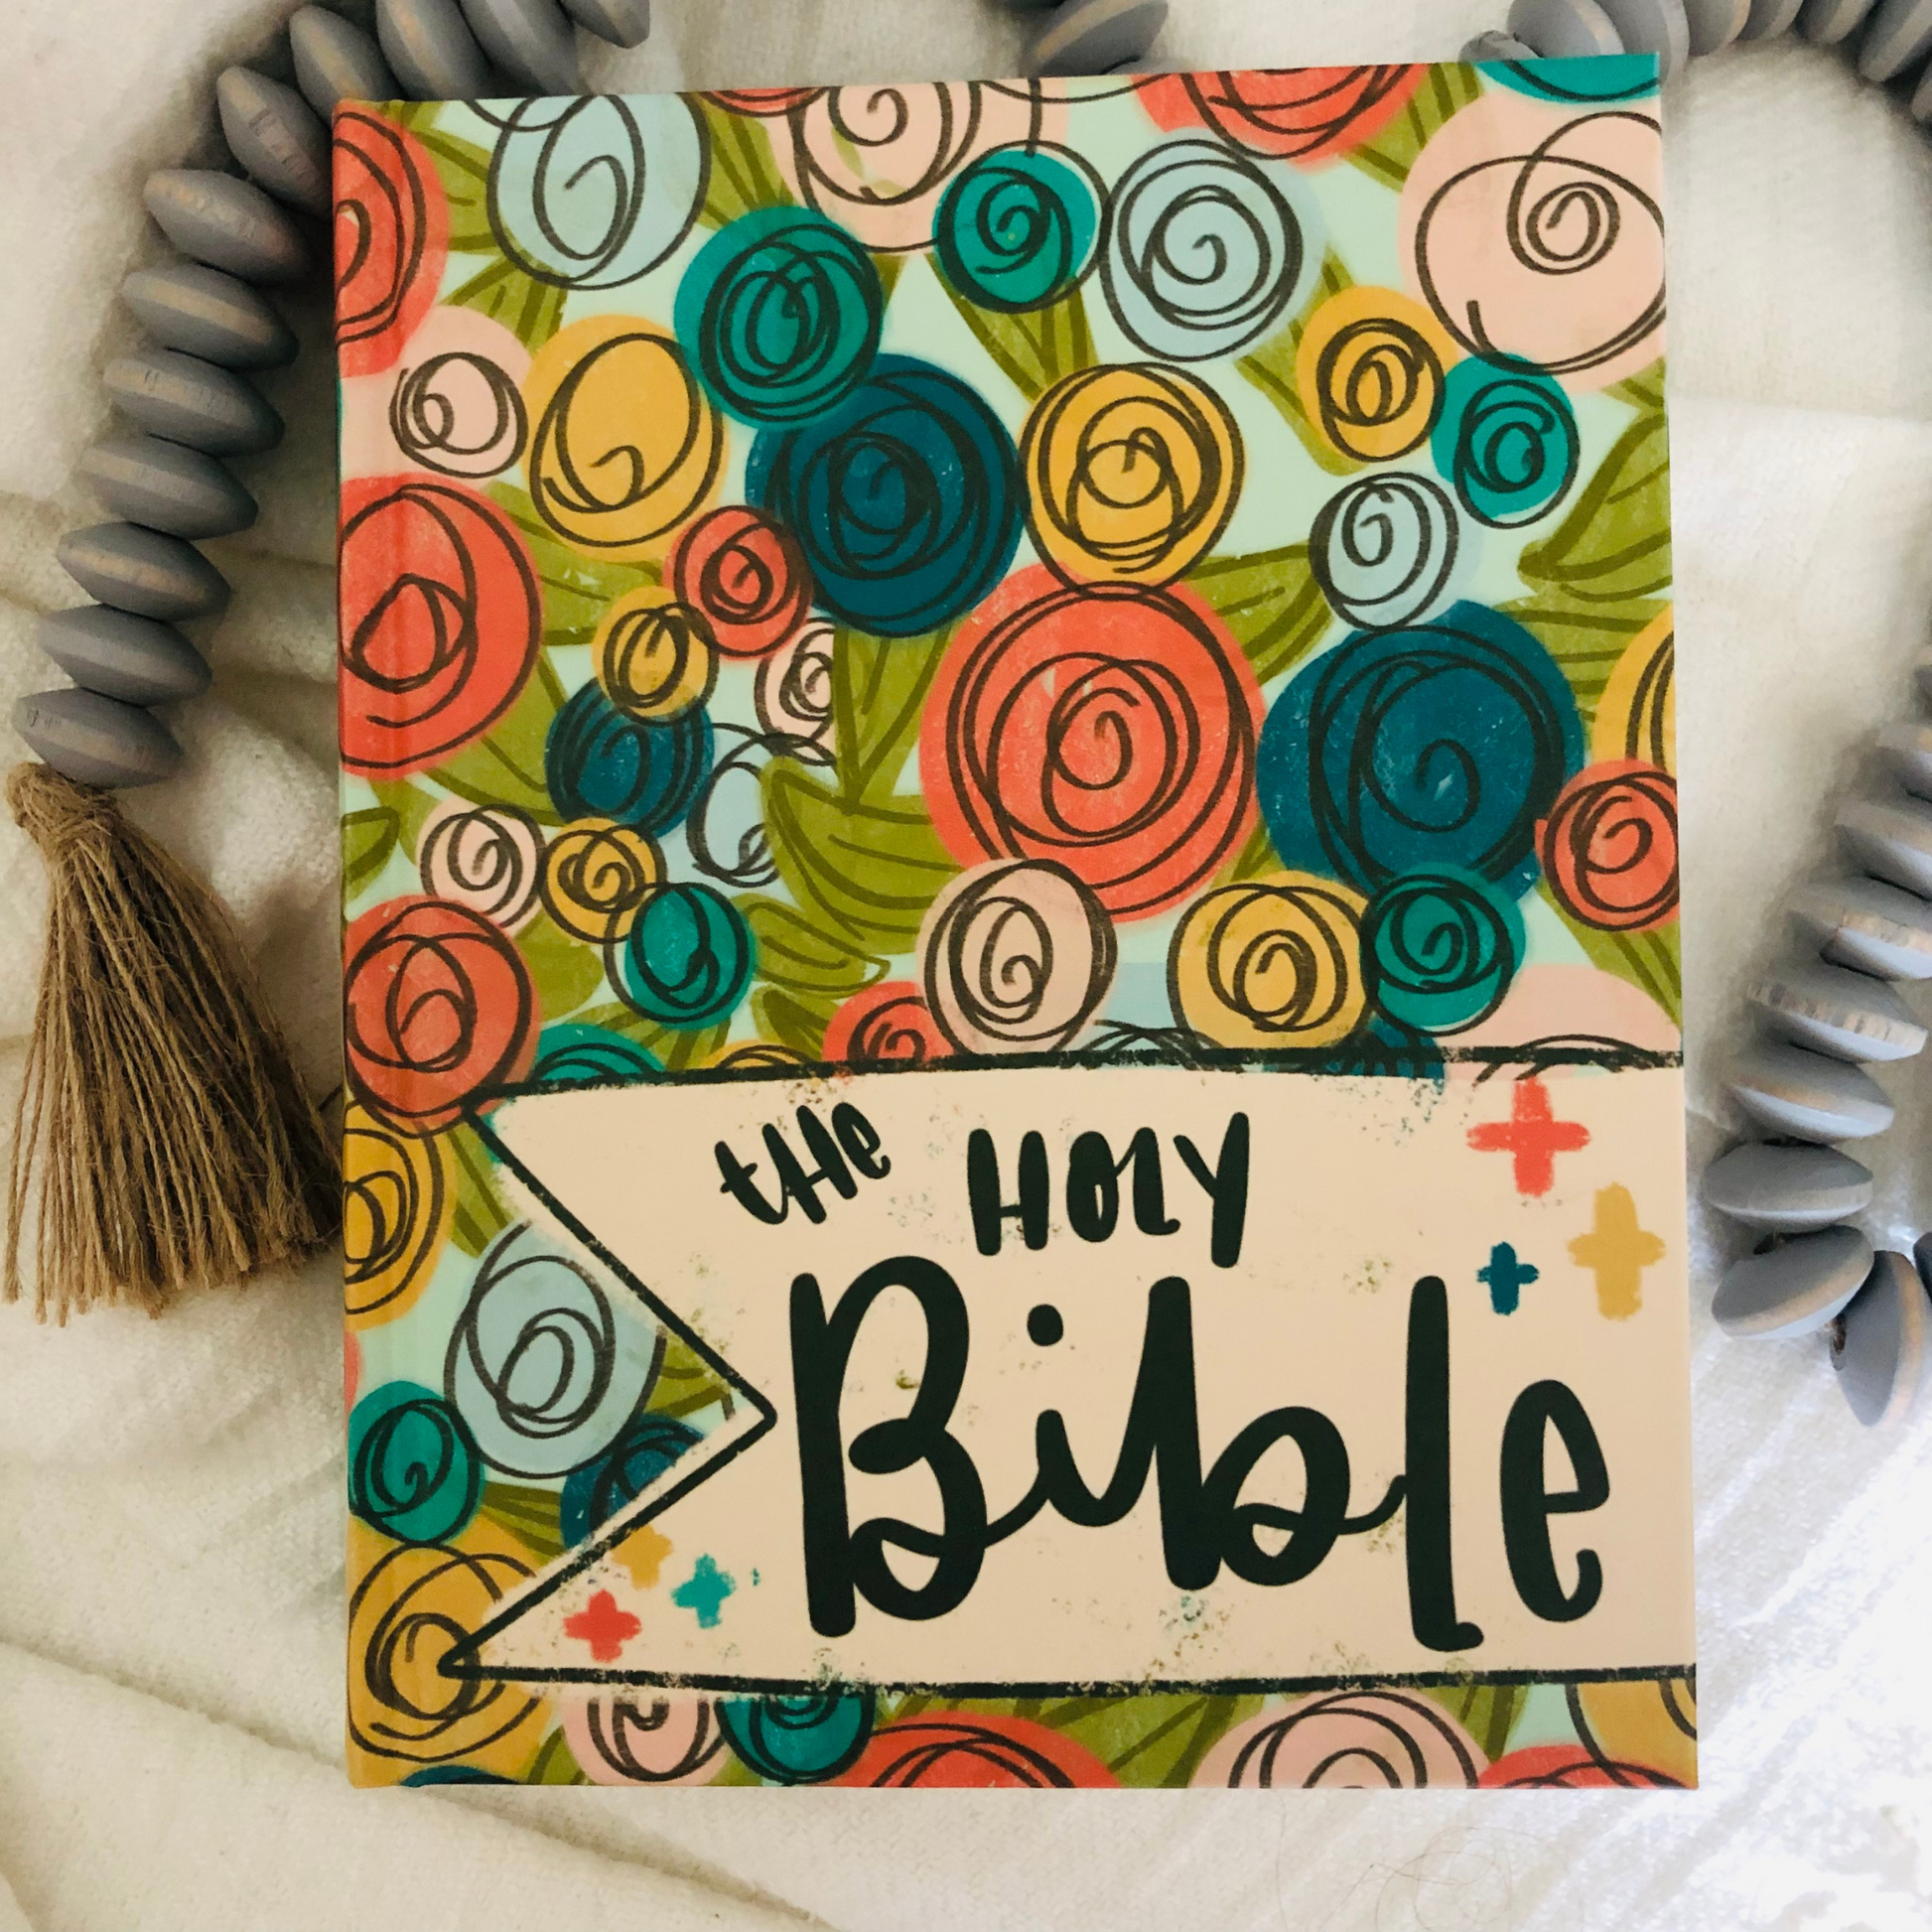 Faith-inspired KJV Bible featuring Vibrant Floral Artwork